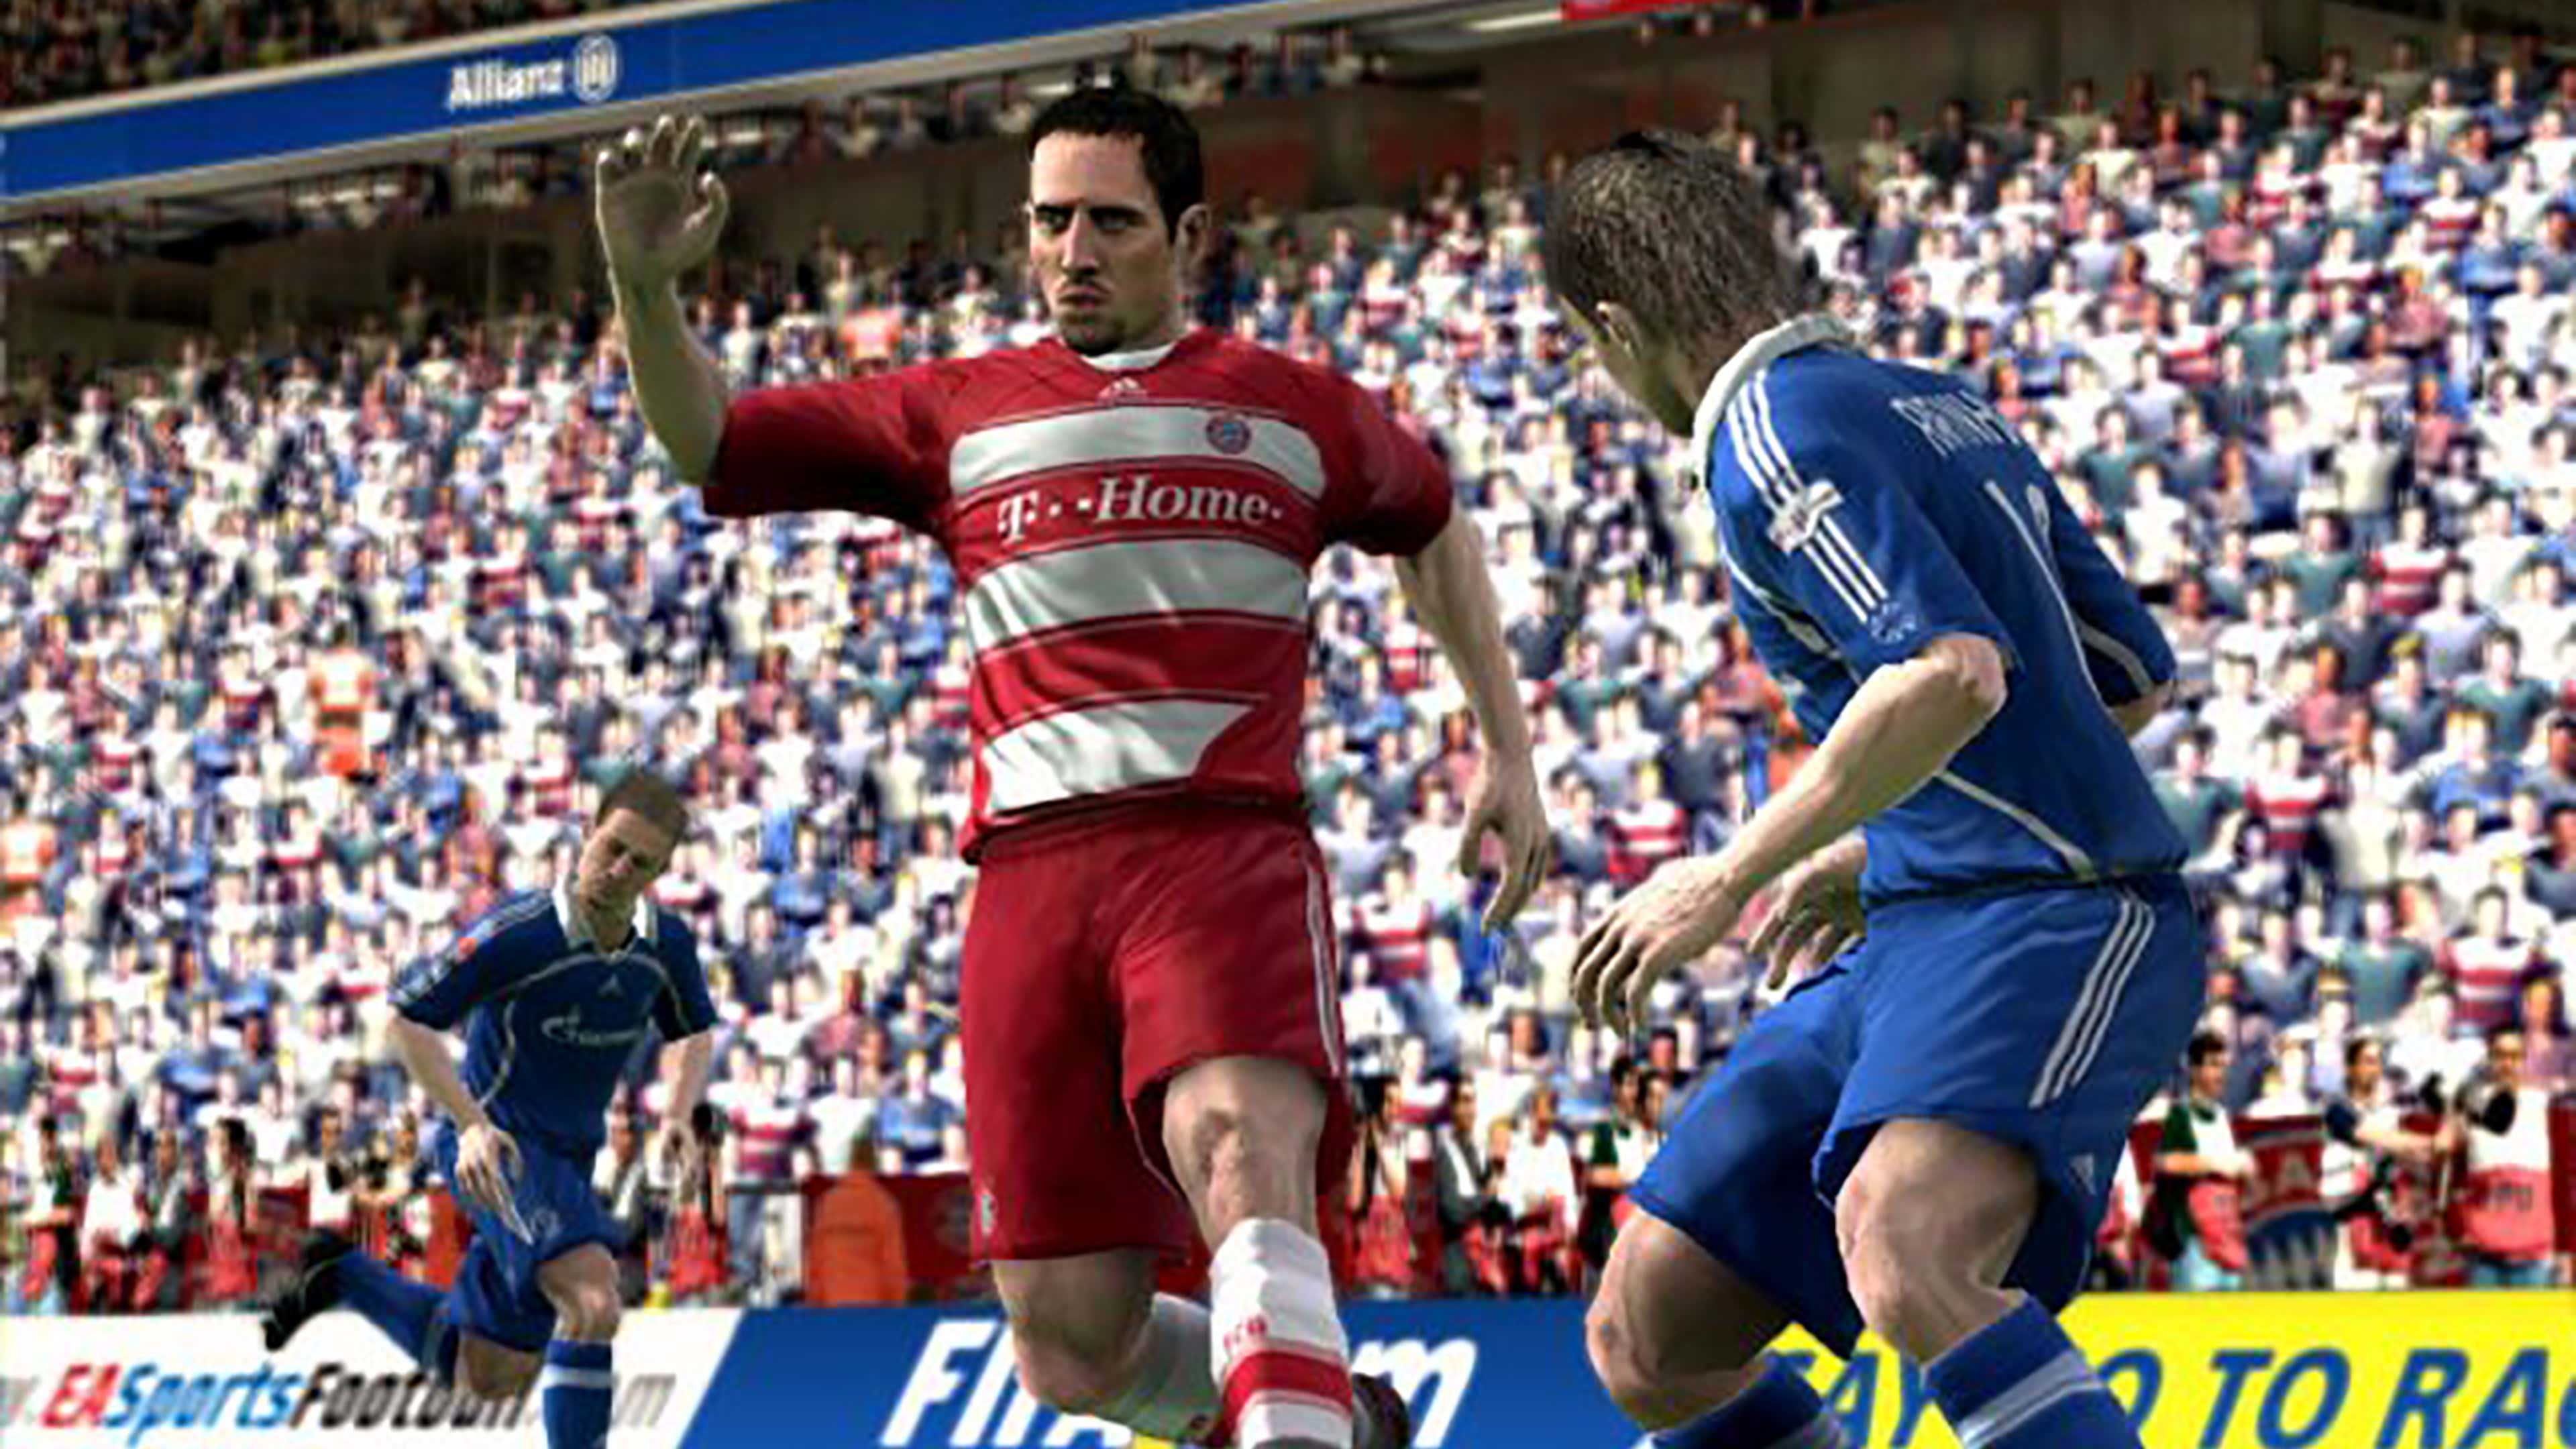 FIFA 09 Free Download - Free Download Full Version